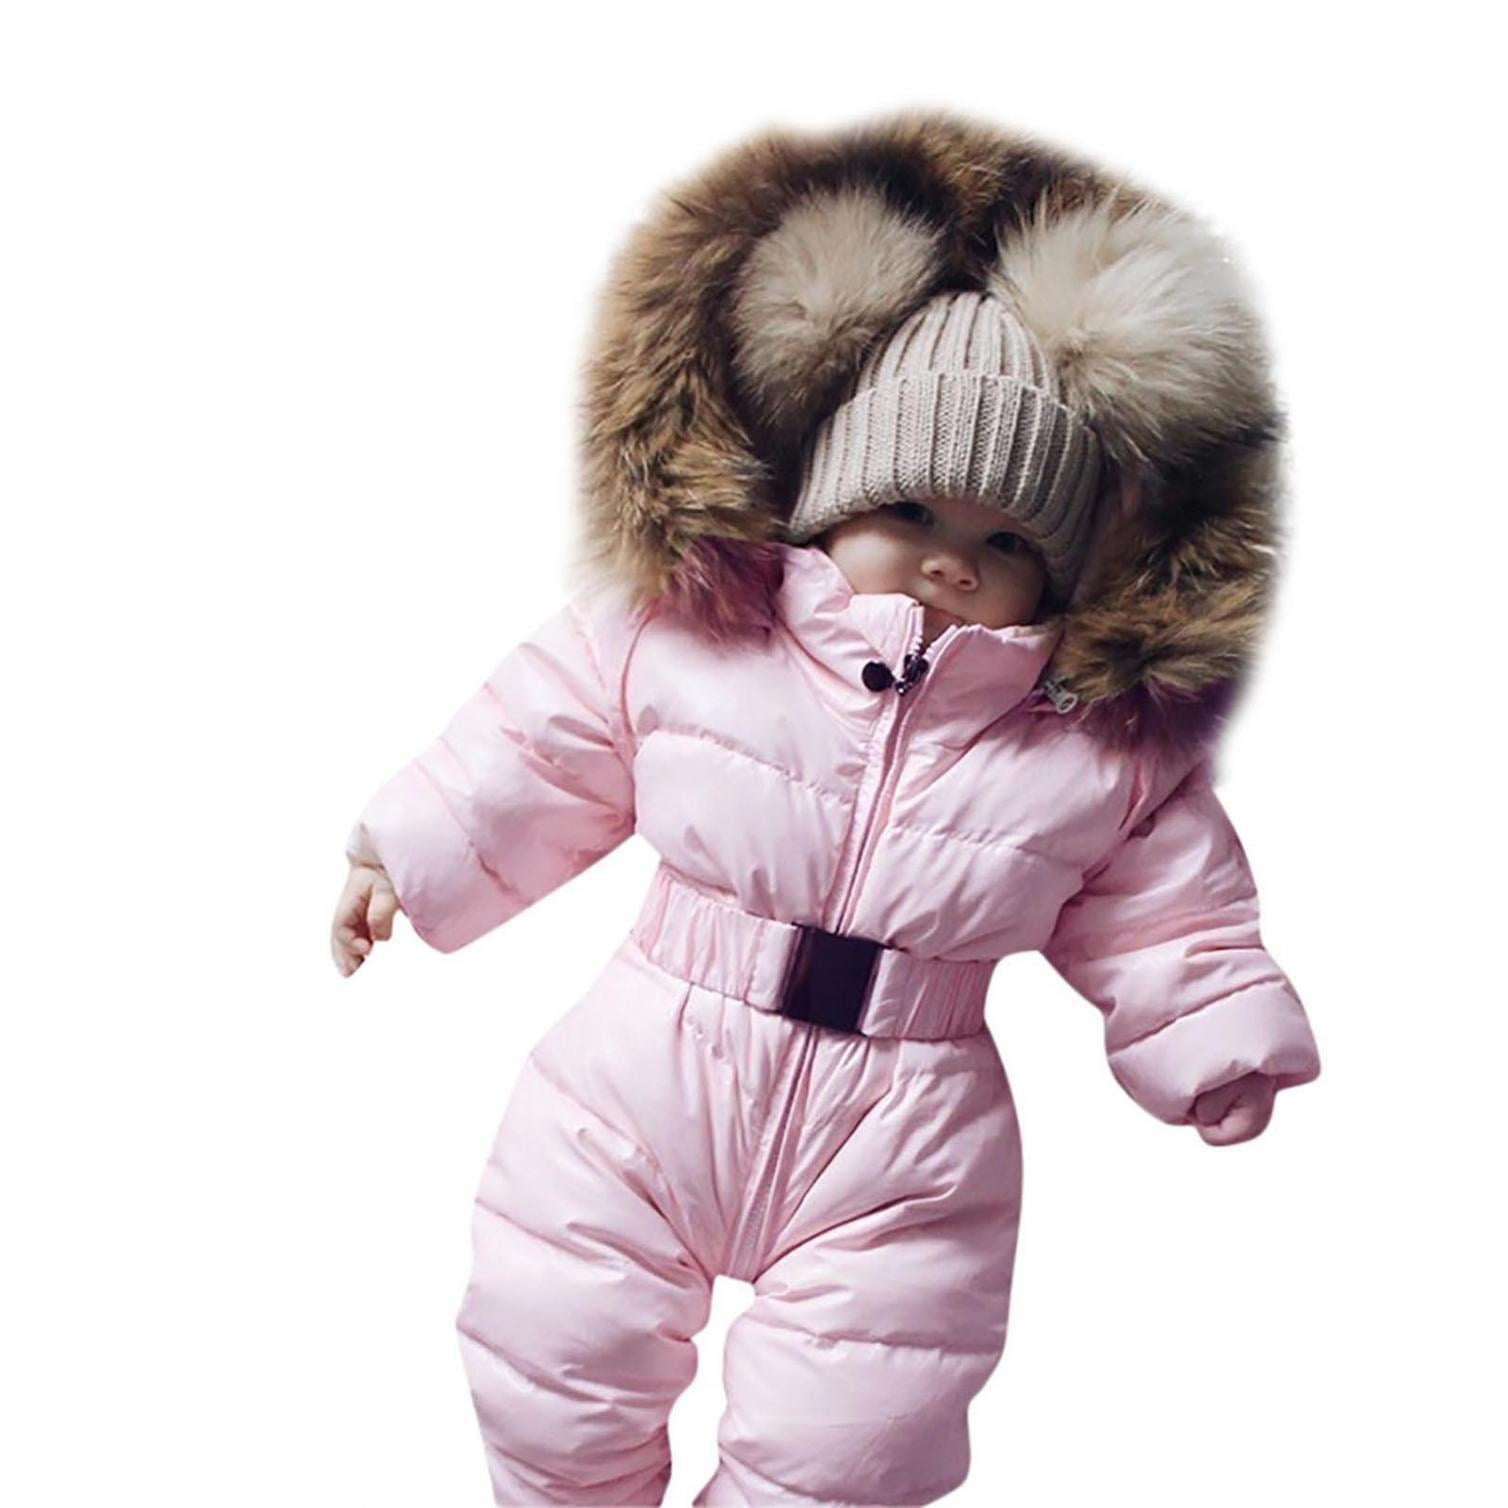 Osh Kosh B'gosh Infant Girls Navy & Pink Heart Print Snowsuit Size 12M 18M 24M 